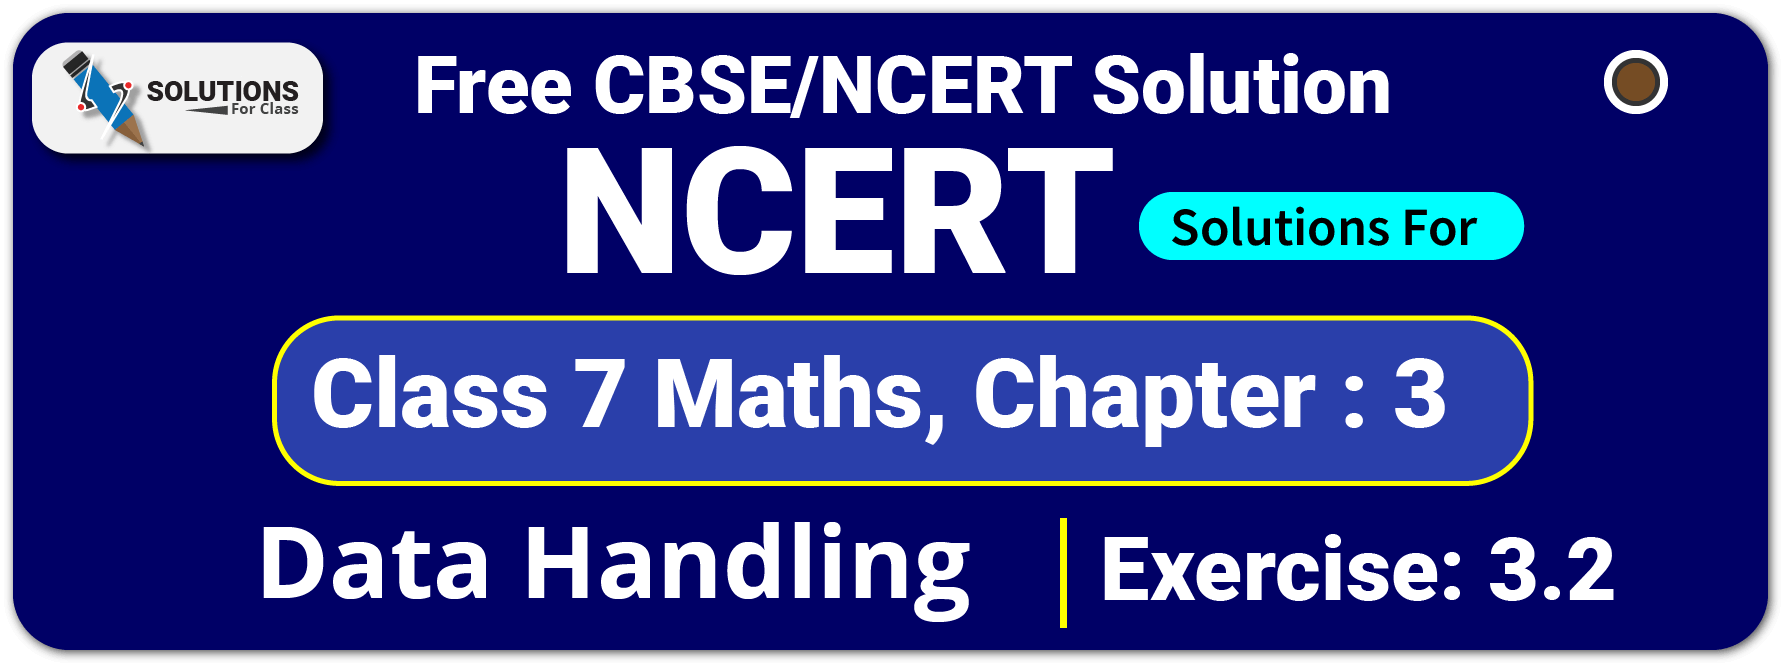 NCERT Solutions For Class 7 Maths Chapter 3, Data Handling, Exercise 3.2